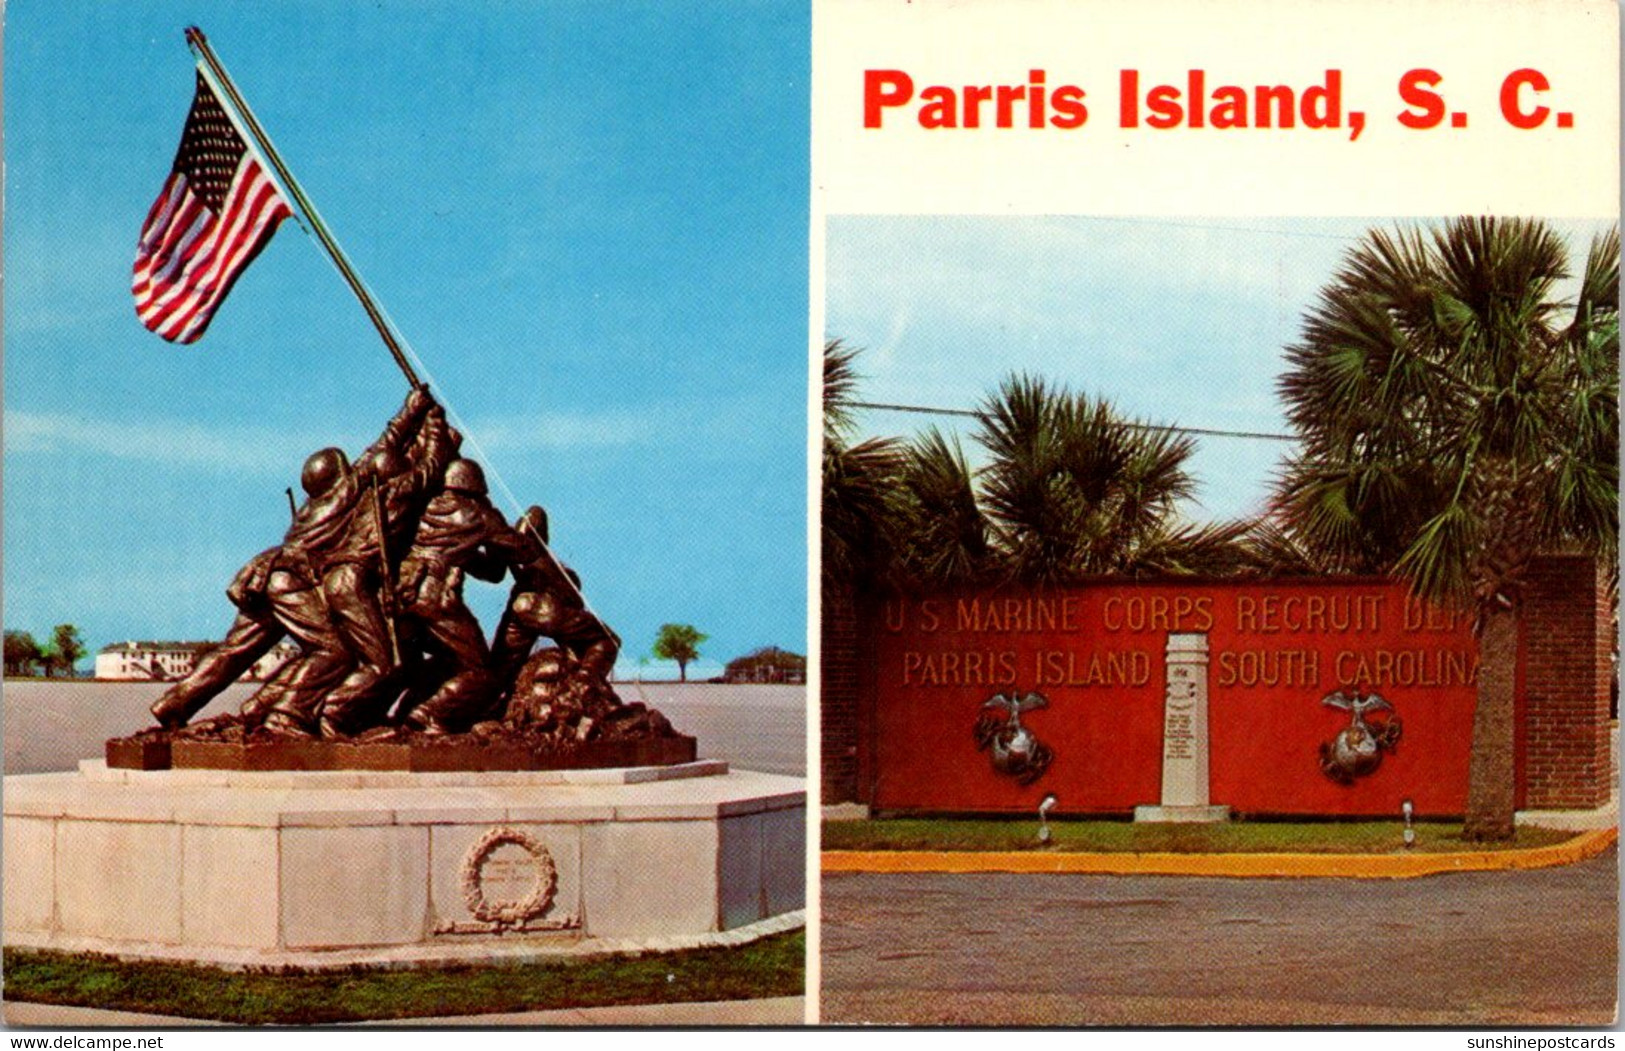 South Carolina Parris Island Marine Corps Recruiting Depot - Parris Island